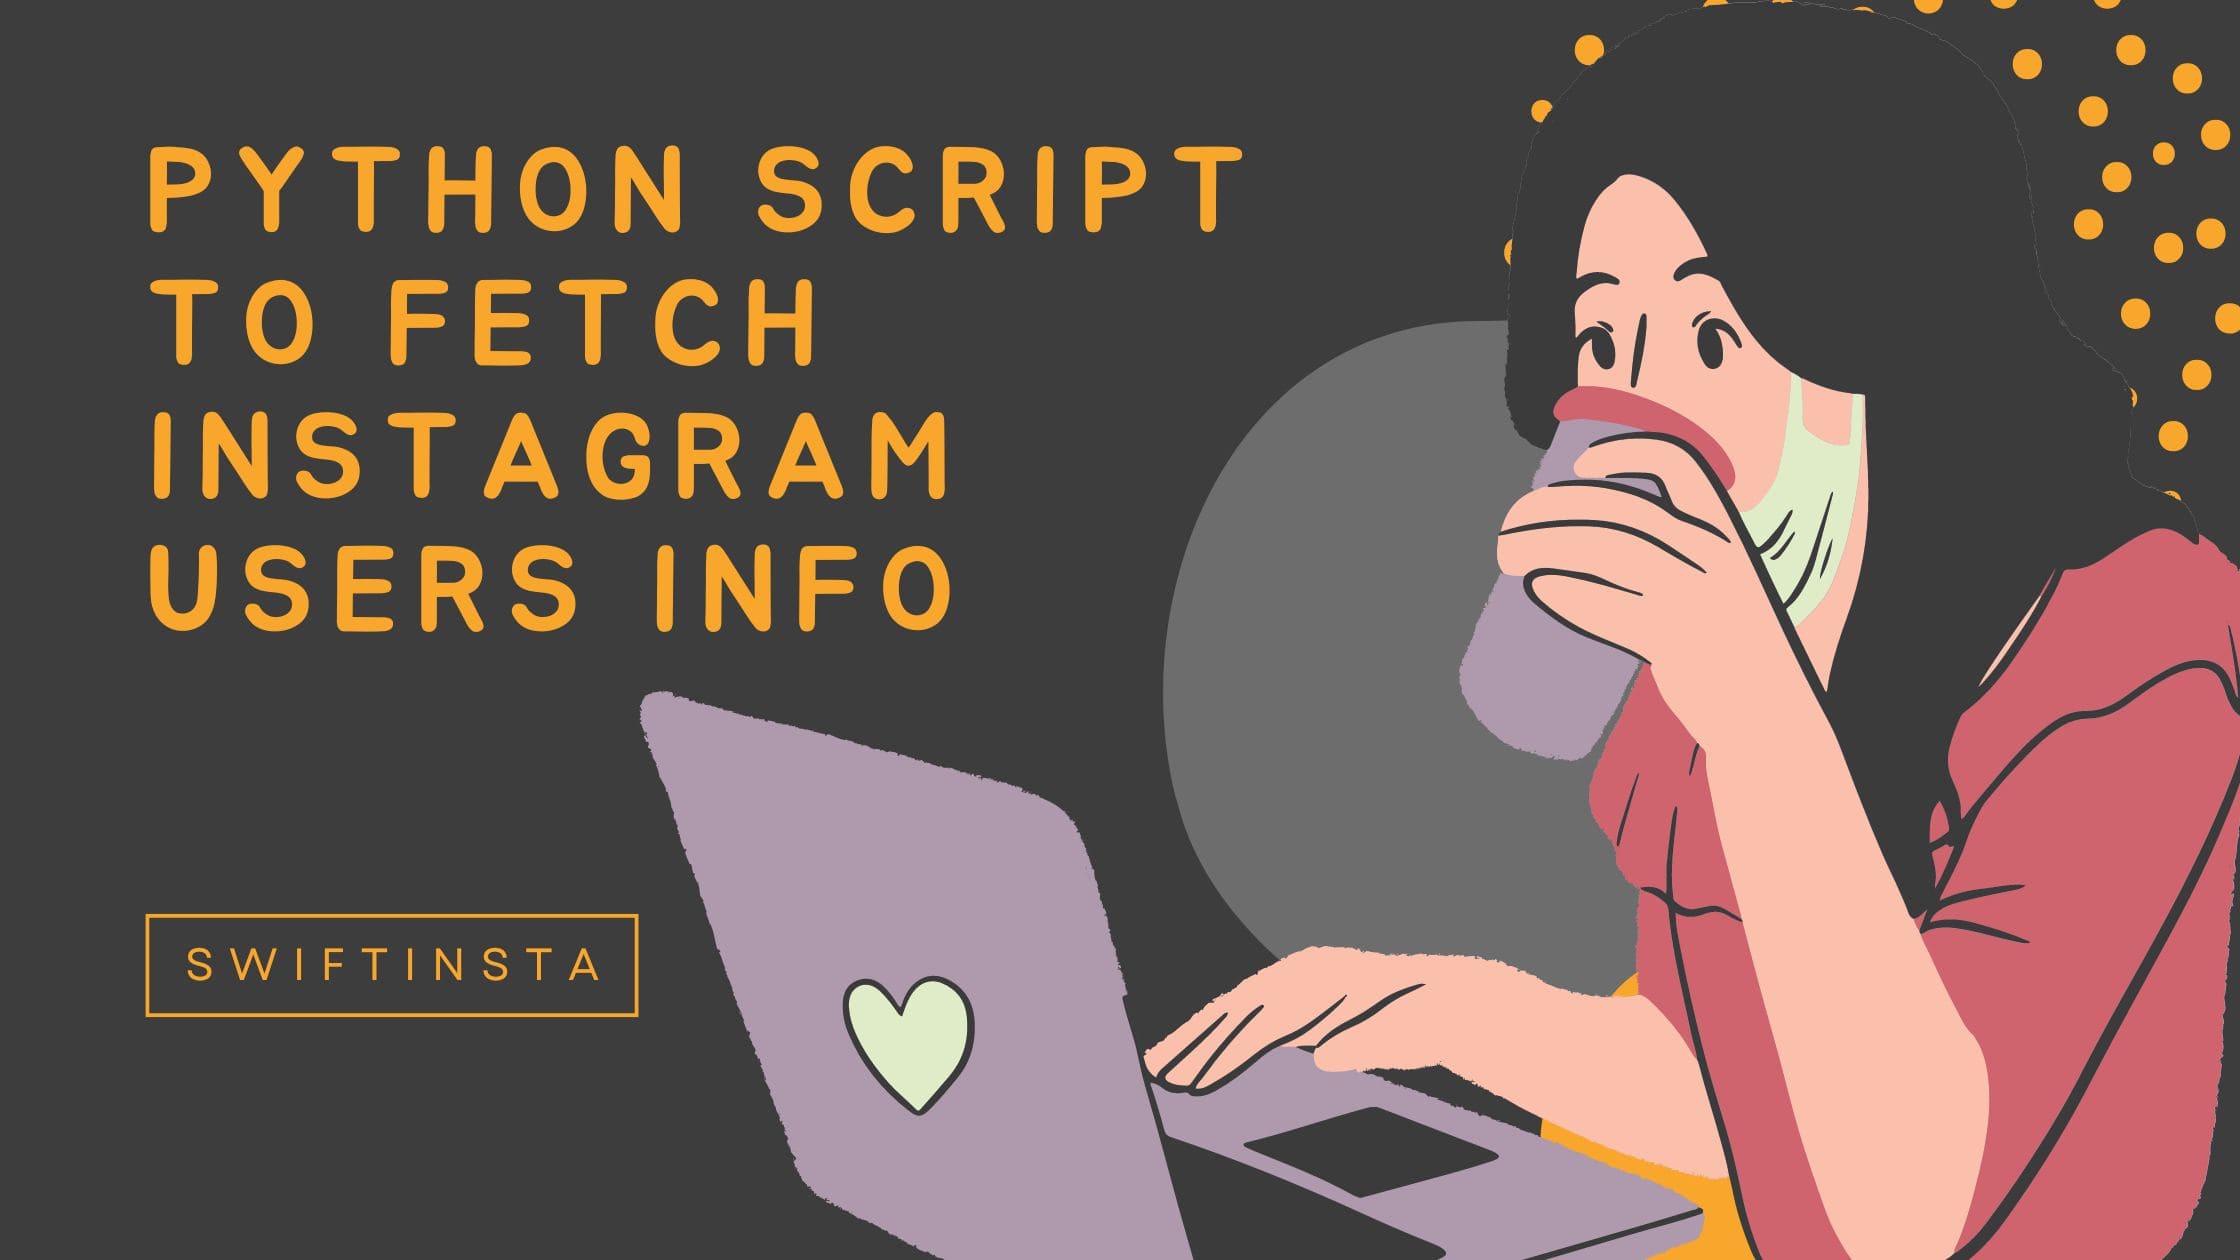 Python script to fetch Instagram users info